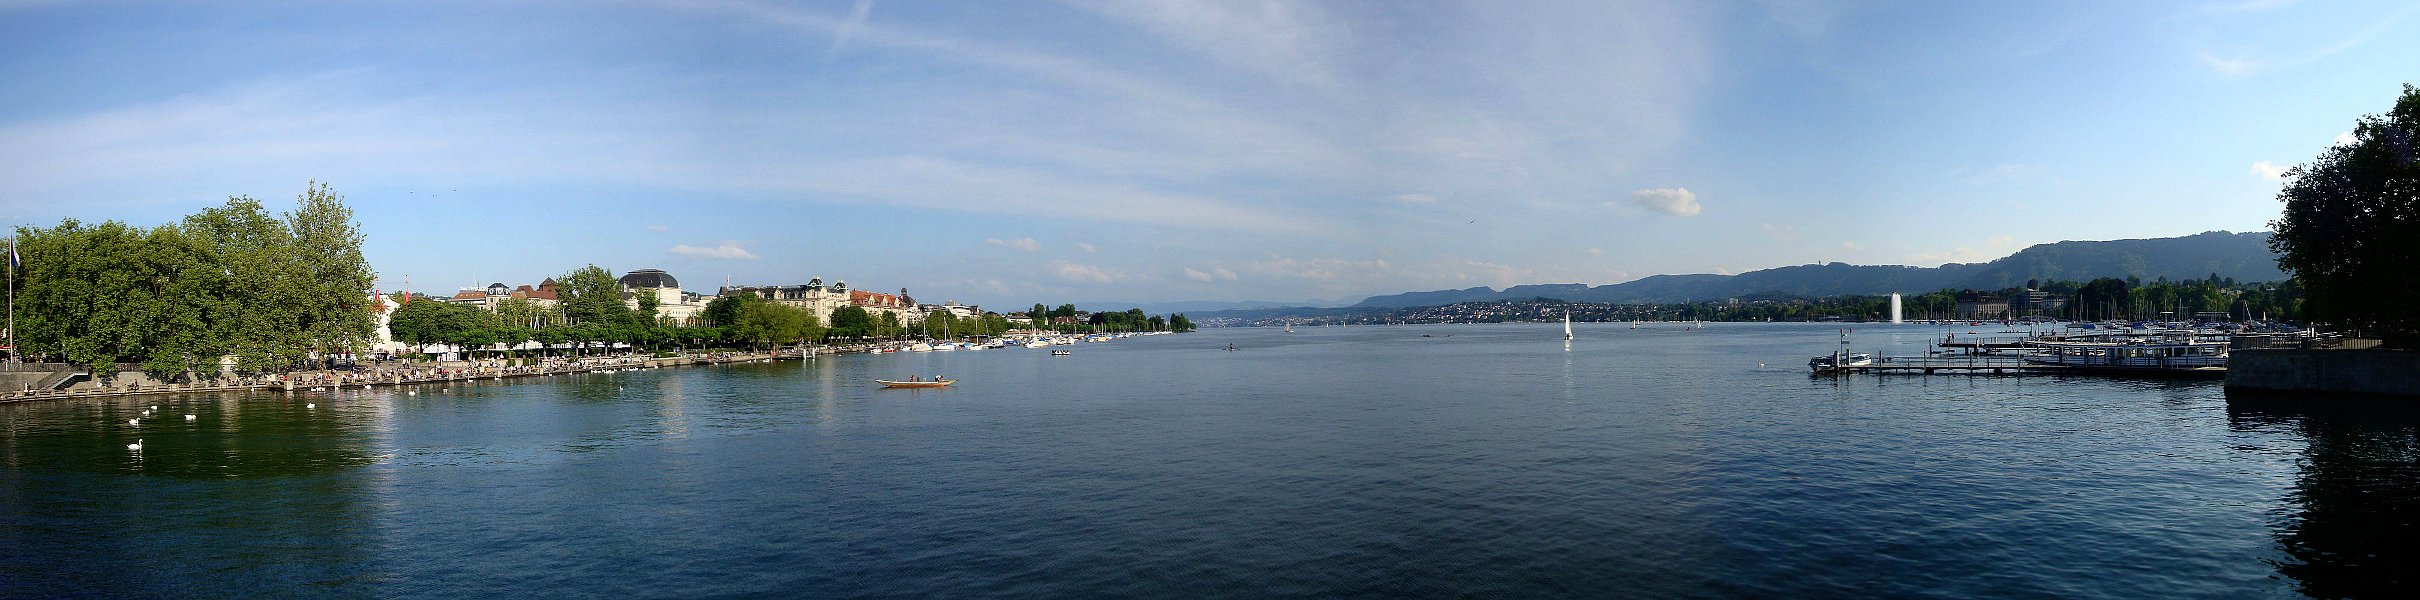 Quaibrücke Zürich